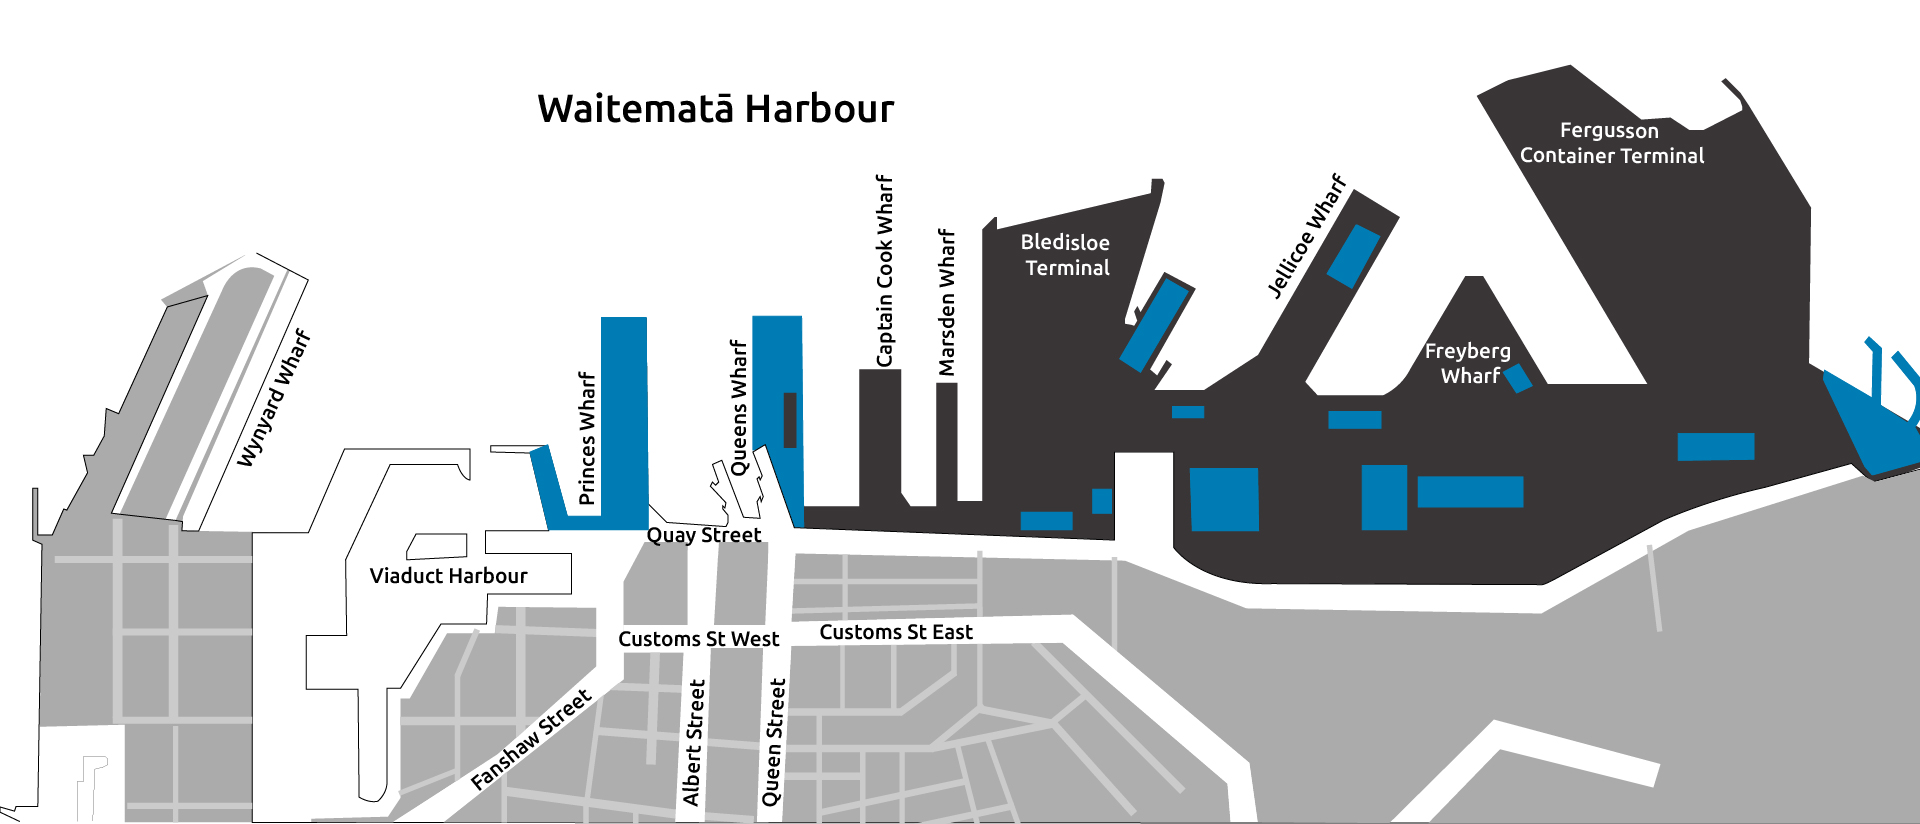 Aerial sketch of the port and harbour showing Wynyard wharf, Viaduct Harbour, Princess Wharf, Queens Wharf, Captain Cook Wharf, Marsden Wharf, Bledisloe Terminal, Jellicoe Wharf, Freyberg Wharf and Fergusson Container Terminal